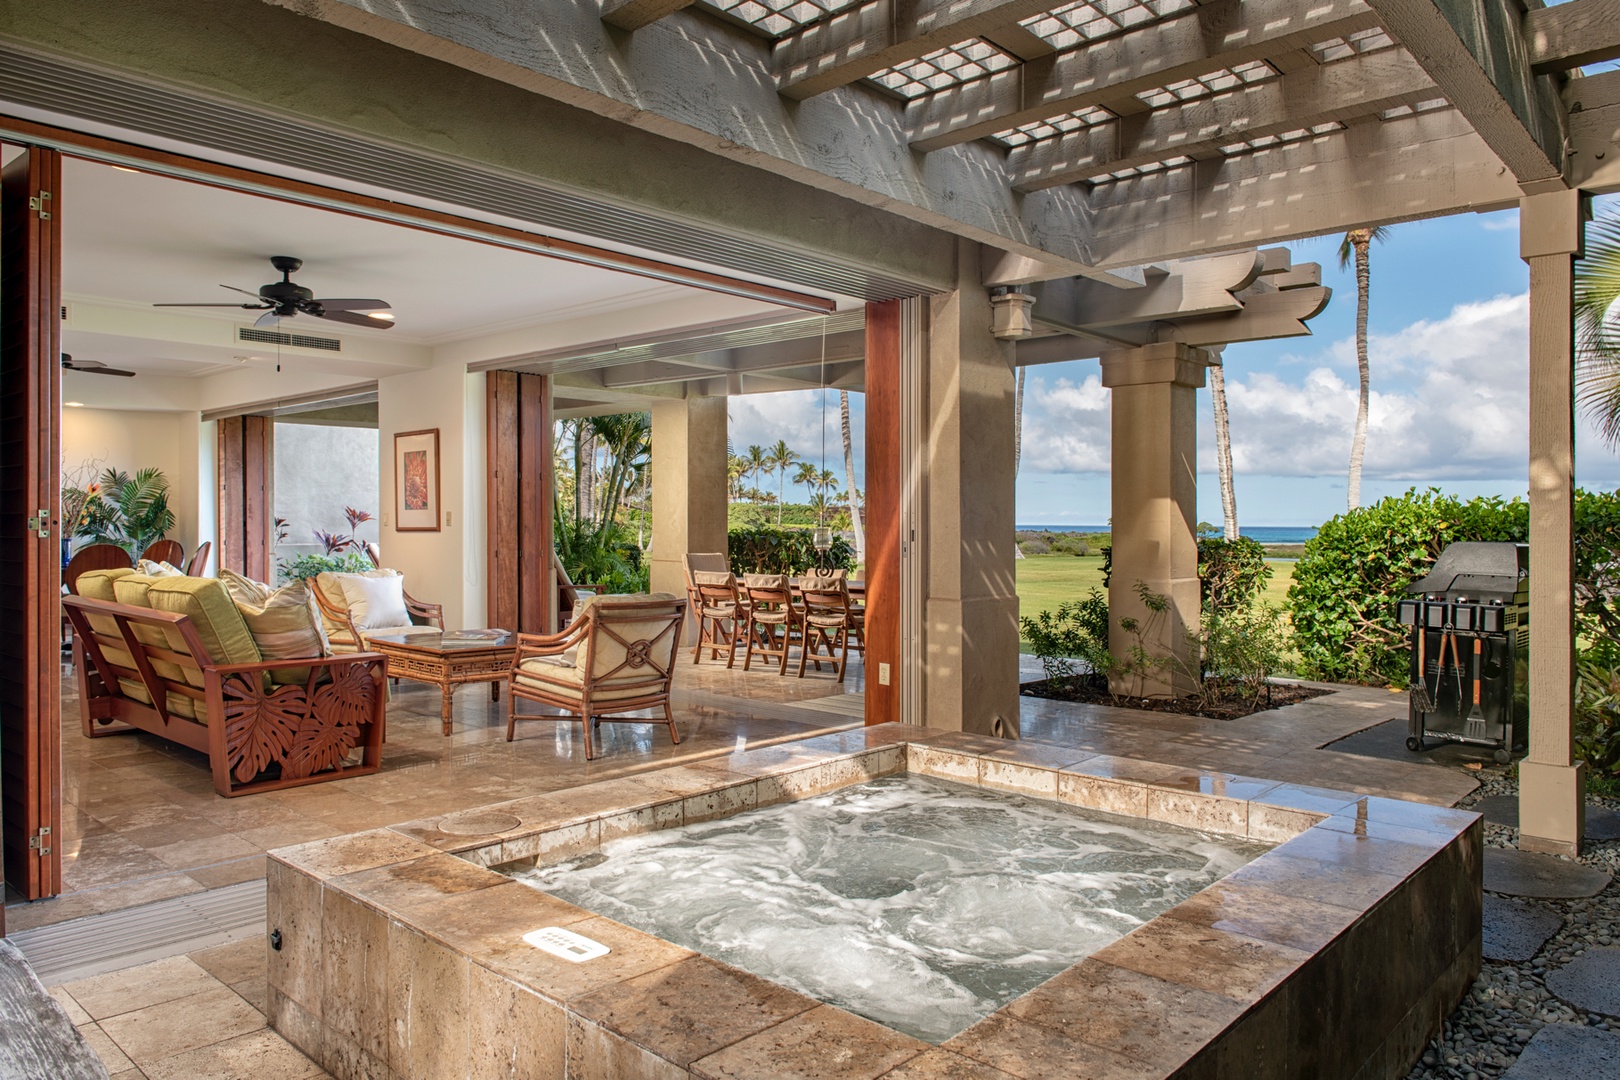 Kailua Kona Vacation Rentals, 3BD Golf Villa (3101) at Four Seasons Resort at Hualalai - Hot tub has a secured cover for added safety.